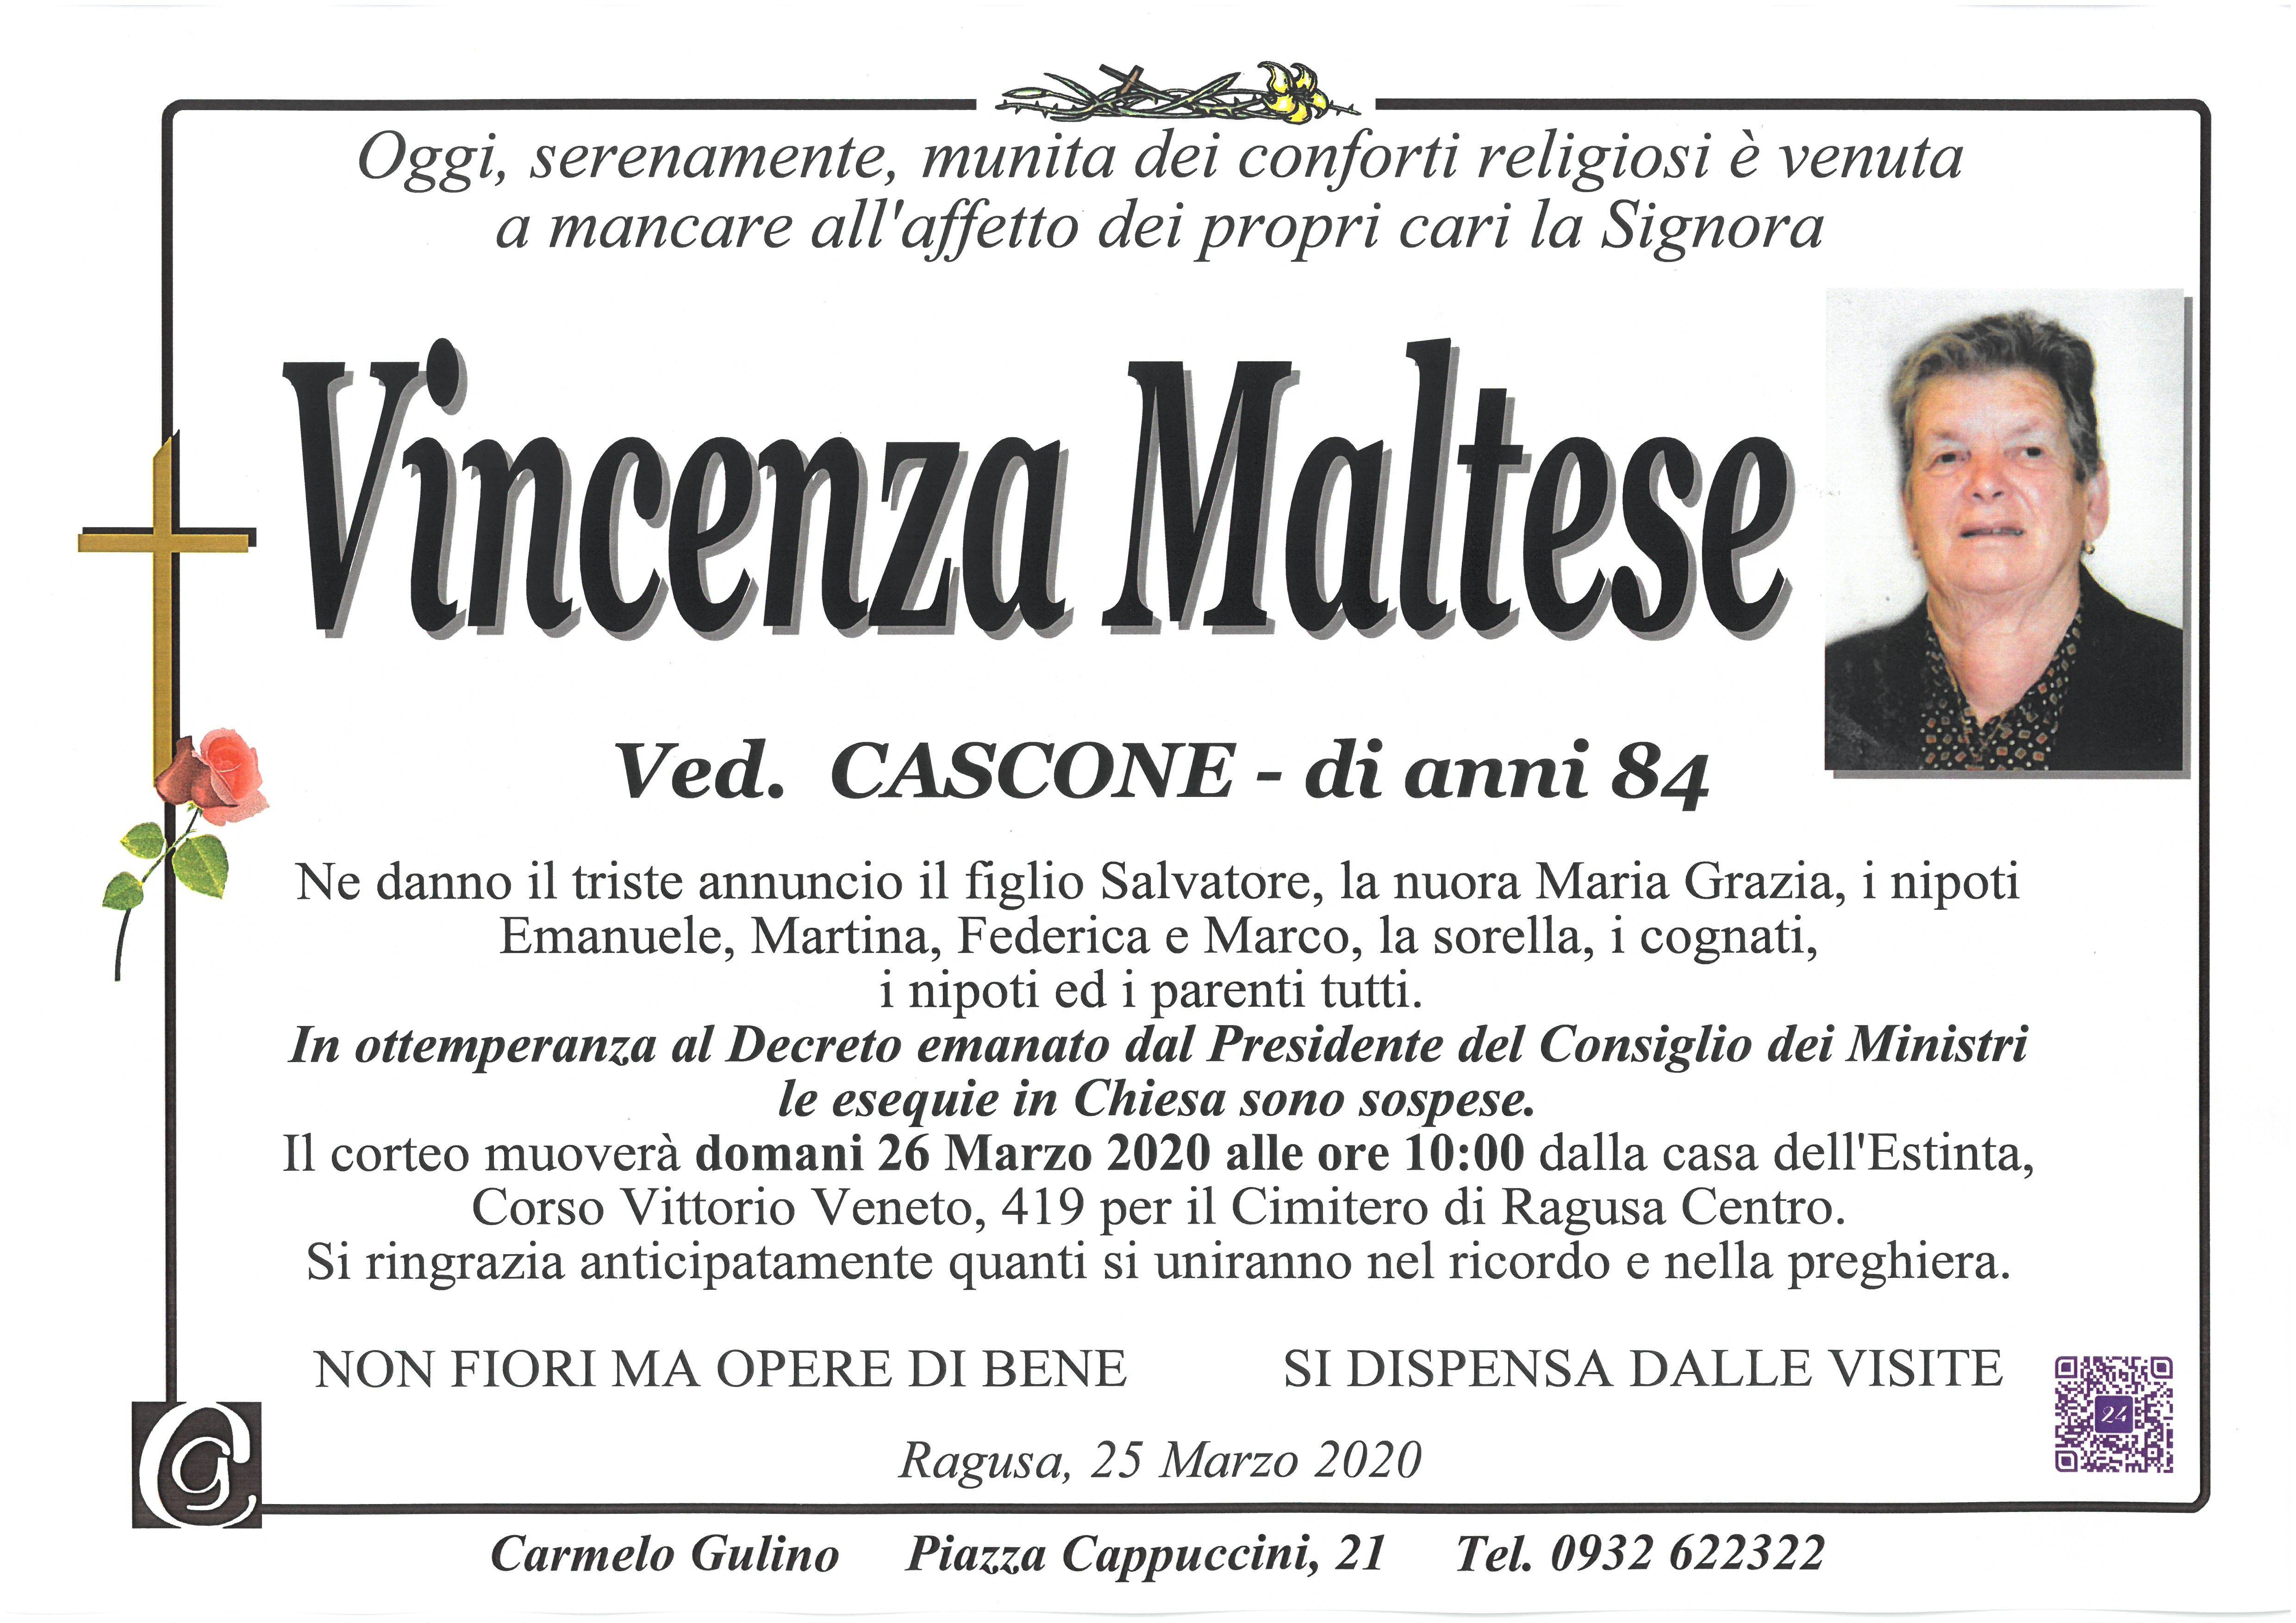 Vincenza Maltese